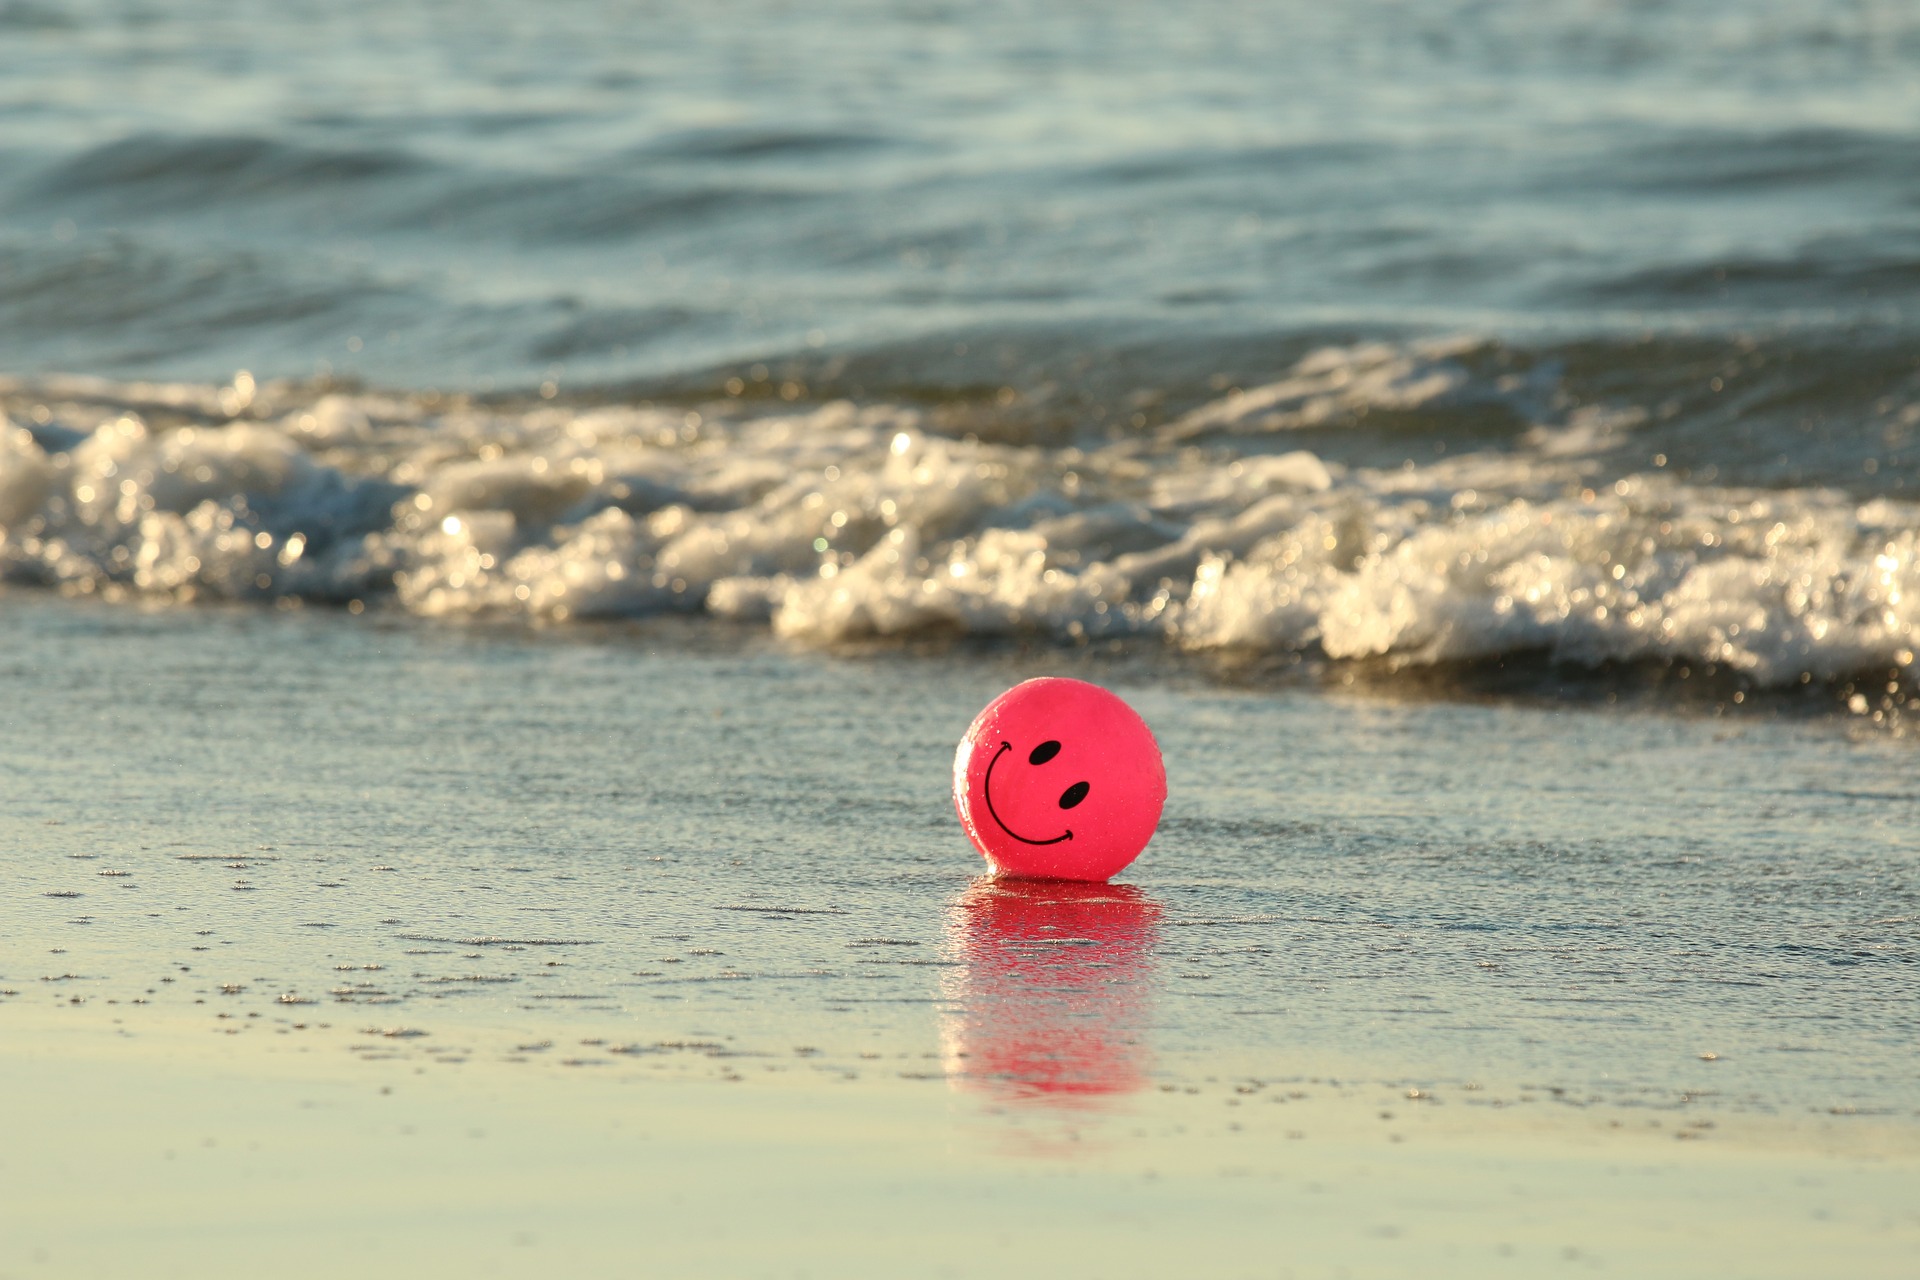 A beach ball with a smile